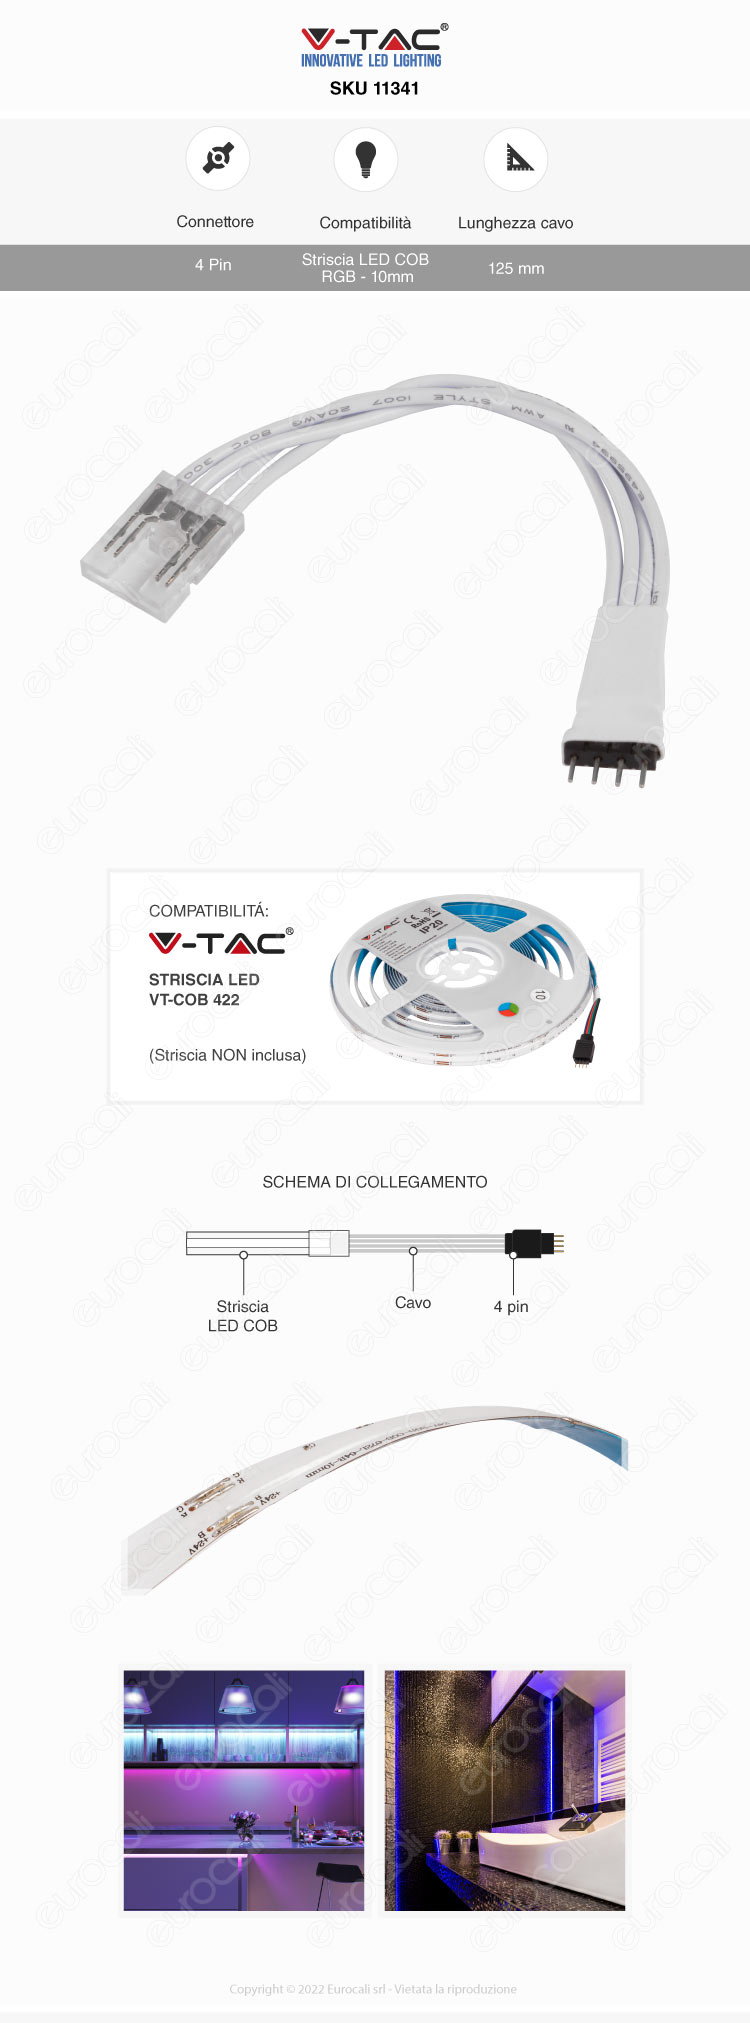 v-tac connettore flessibile 4 pin per strisce led cob